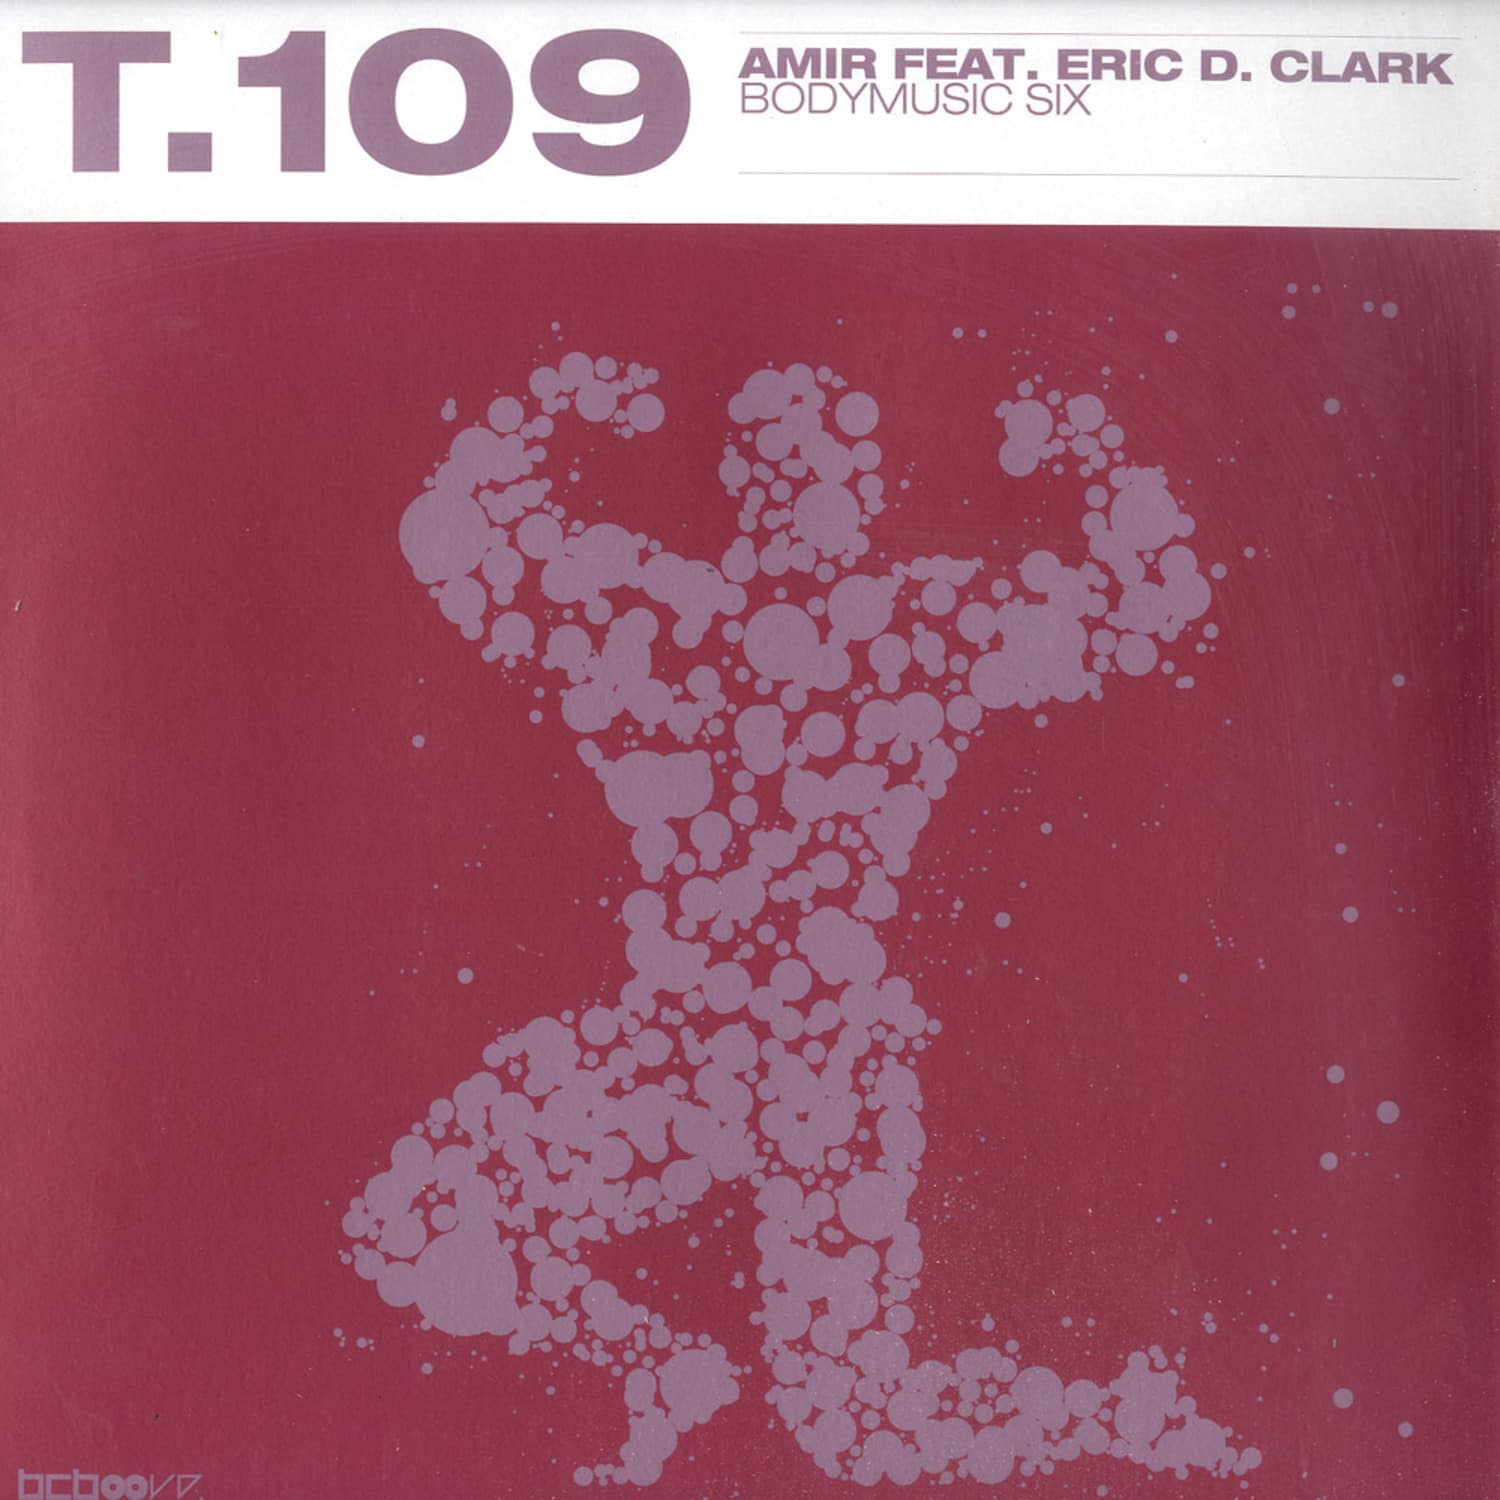 Amir feat. Eric D. Clark - BODYMUSIC SIX